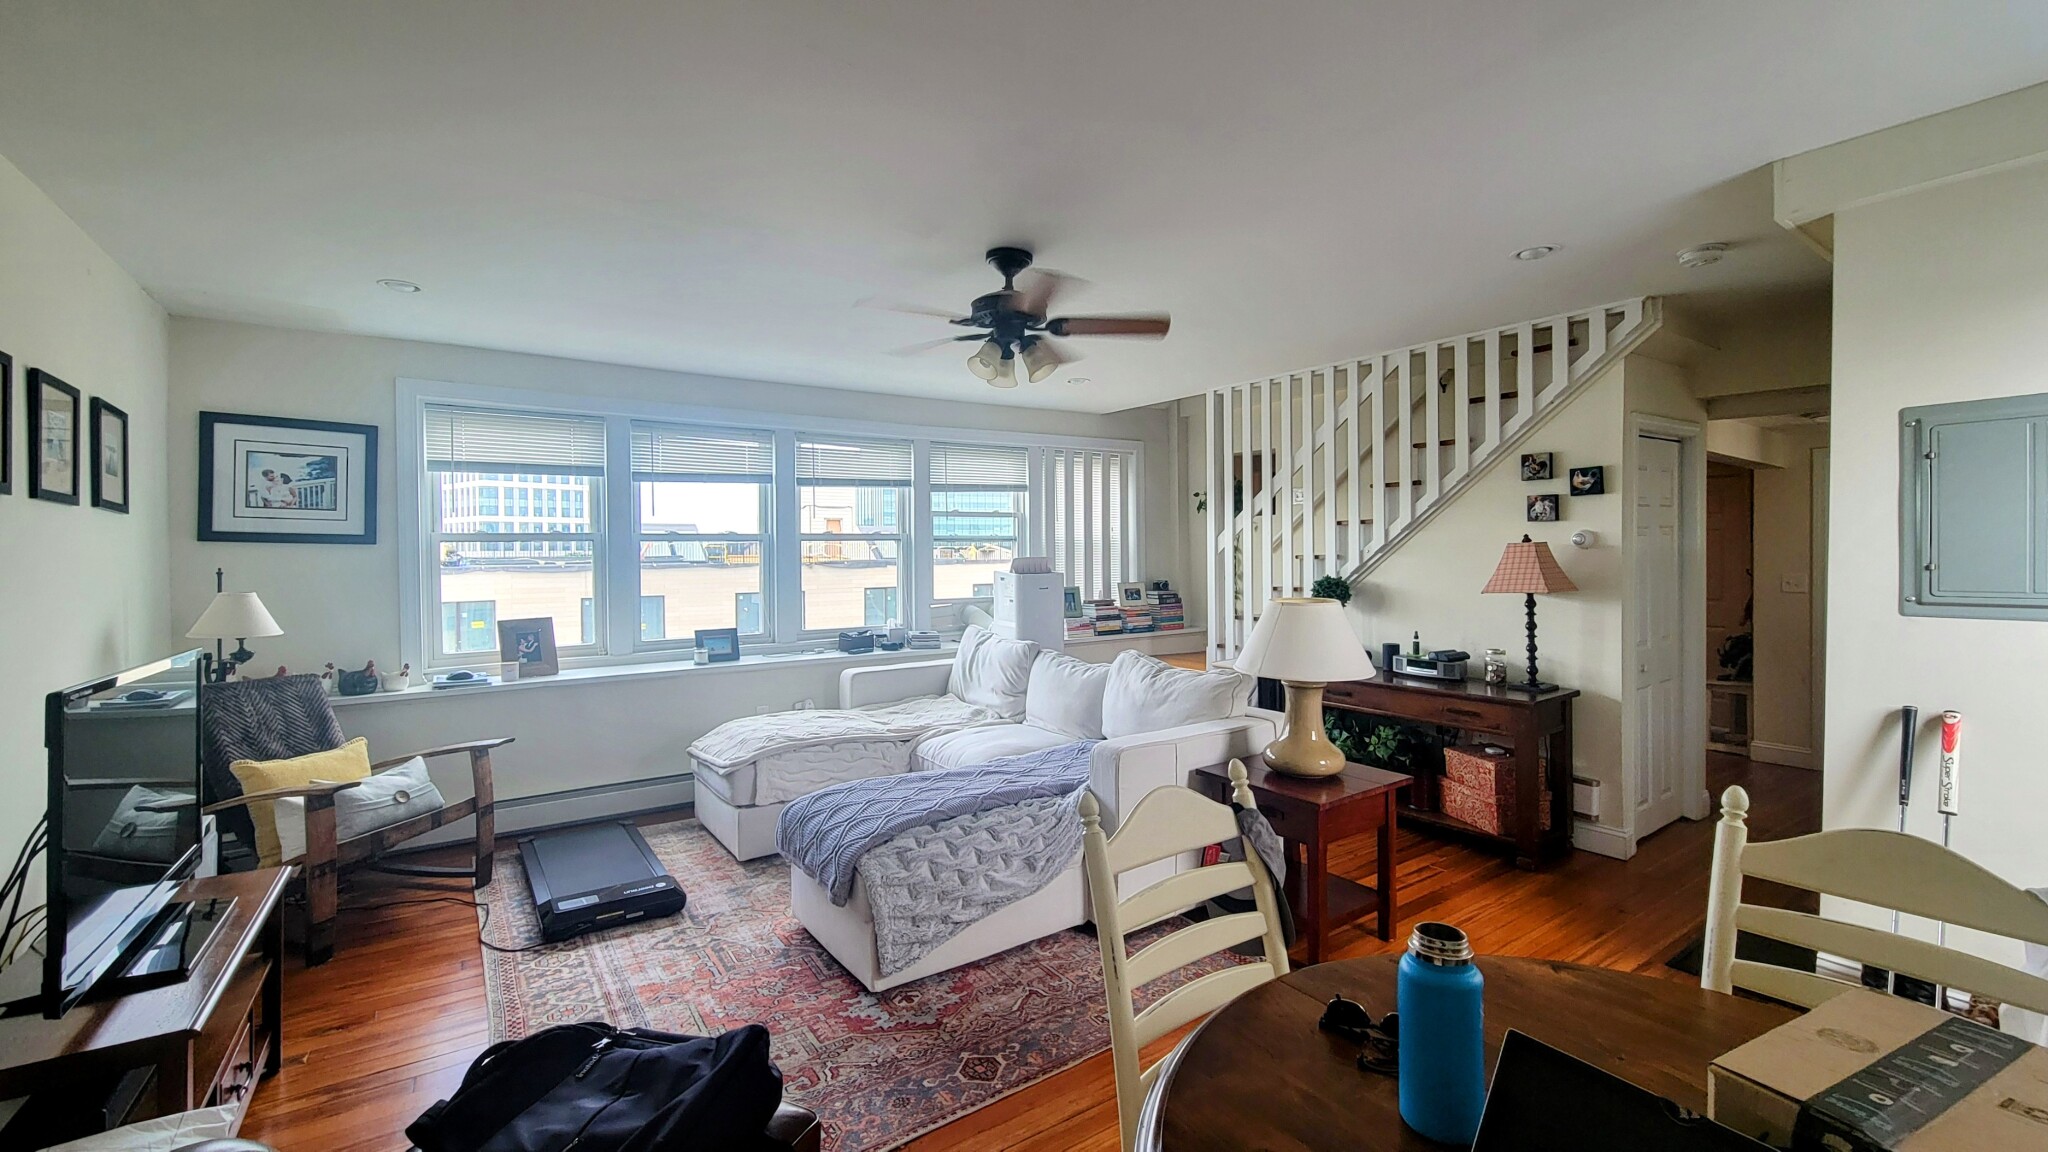 Photos of apartment on Massachusetts Ave.,Cambridge MA 02139